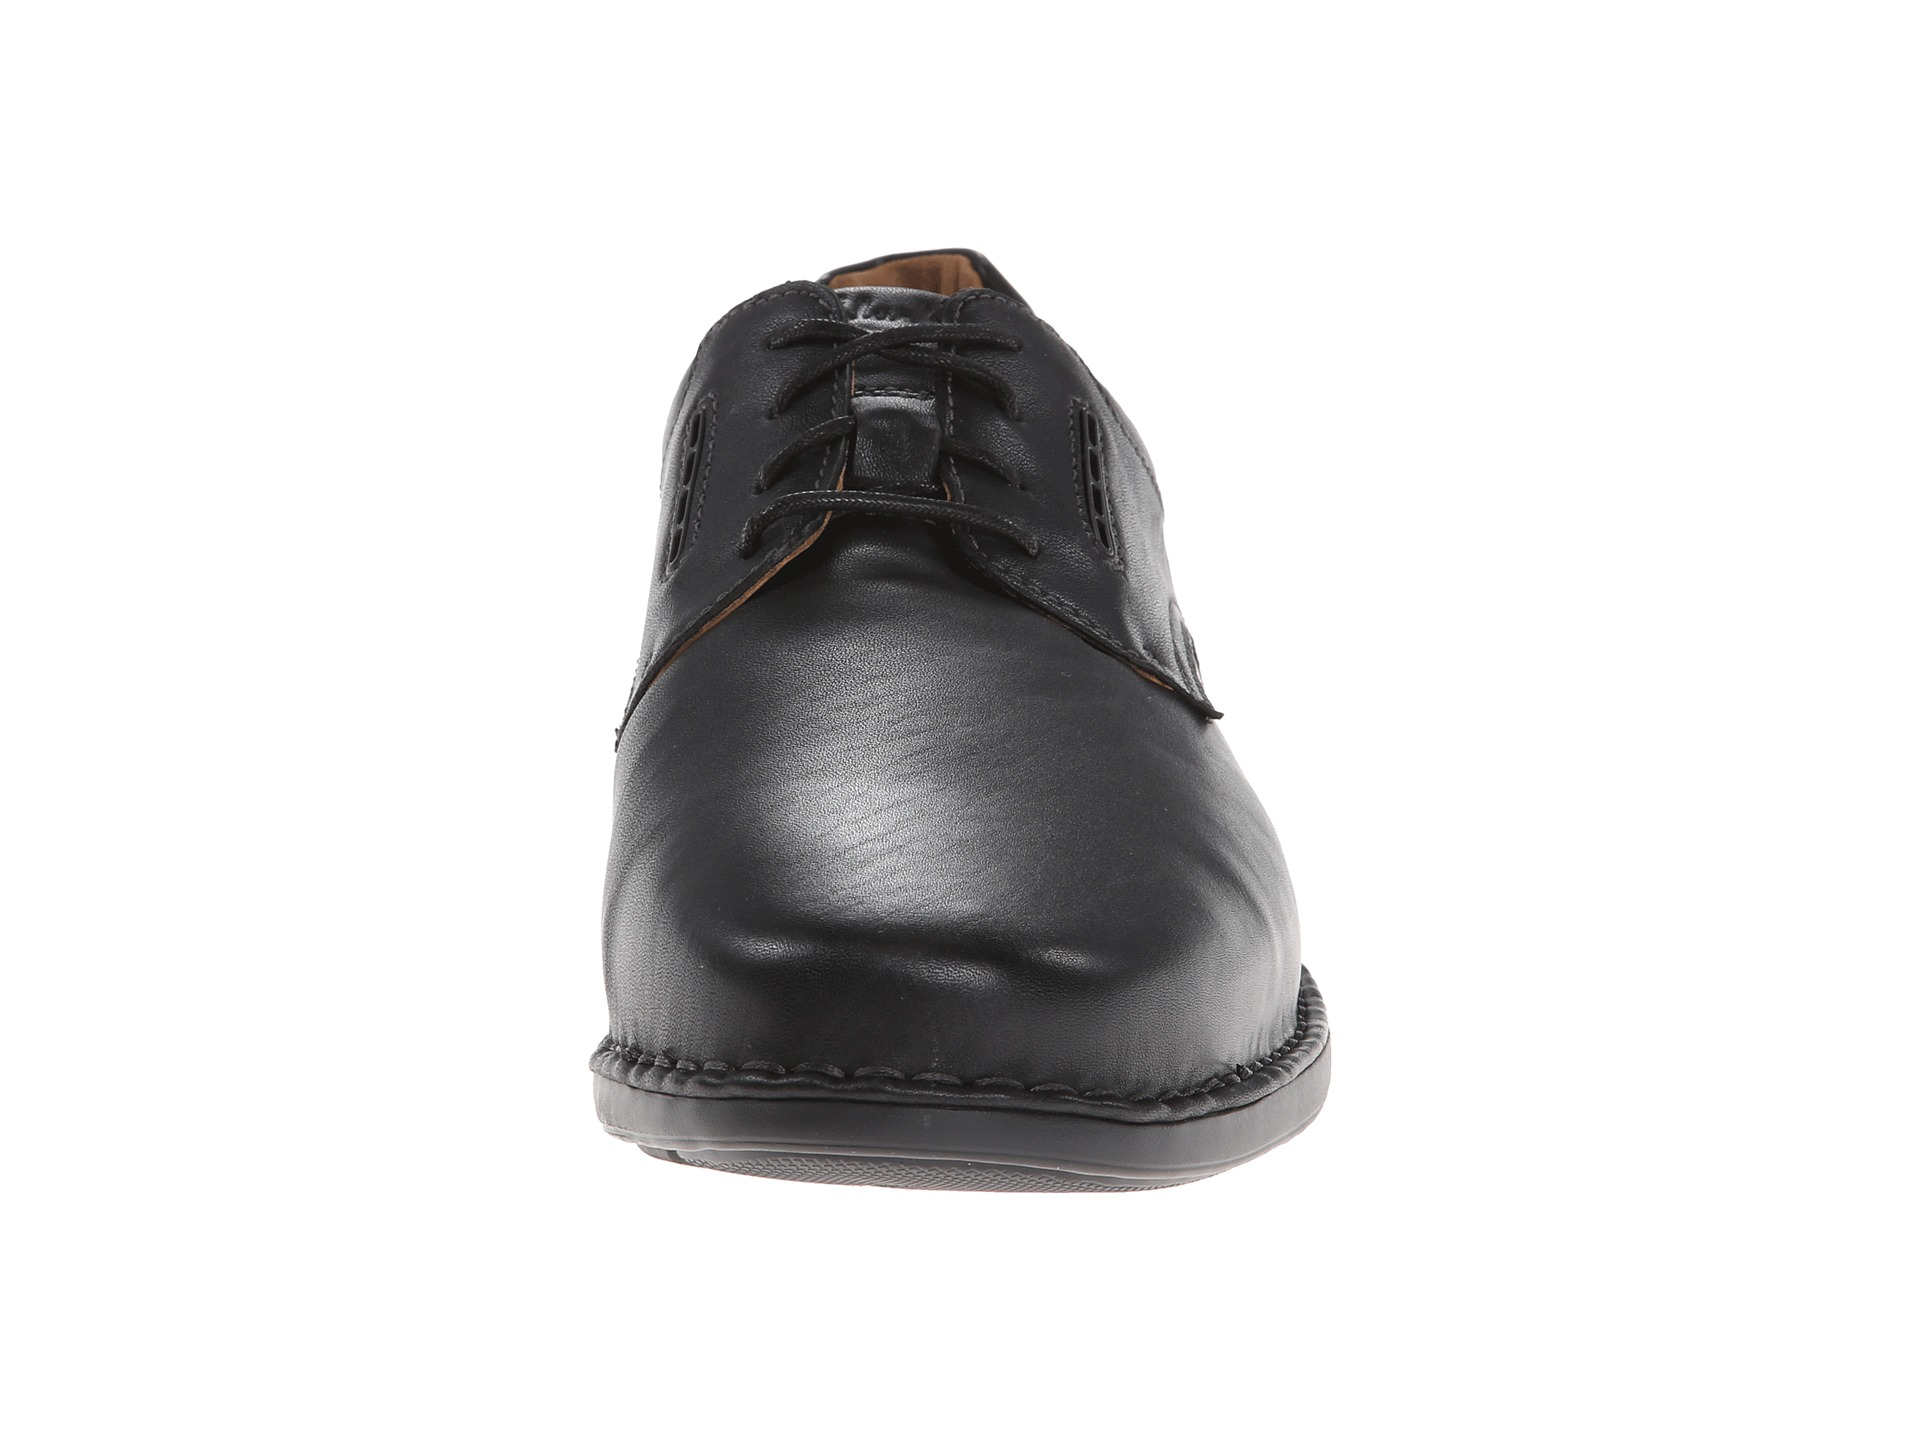 Clarks Leather Un.corner Plain in Black Leather (Black) for Men - Lyst